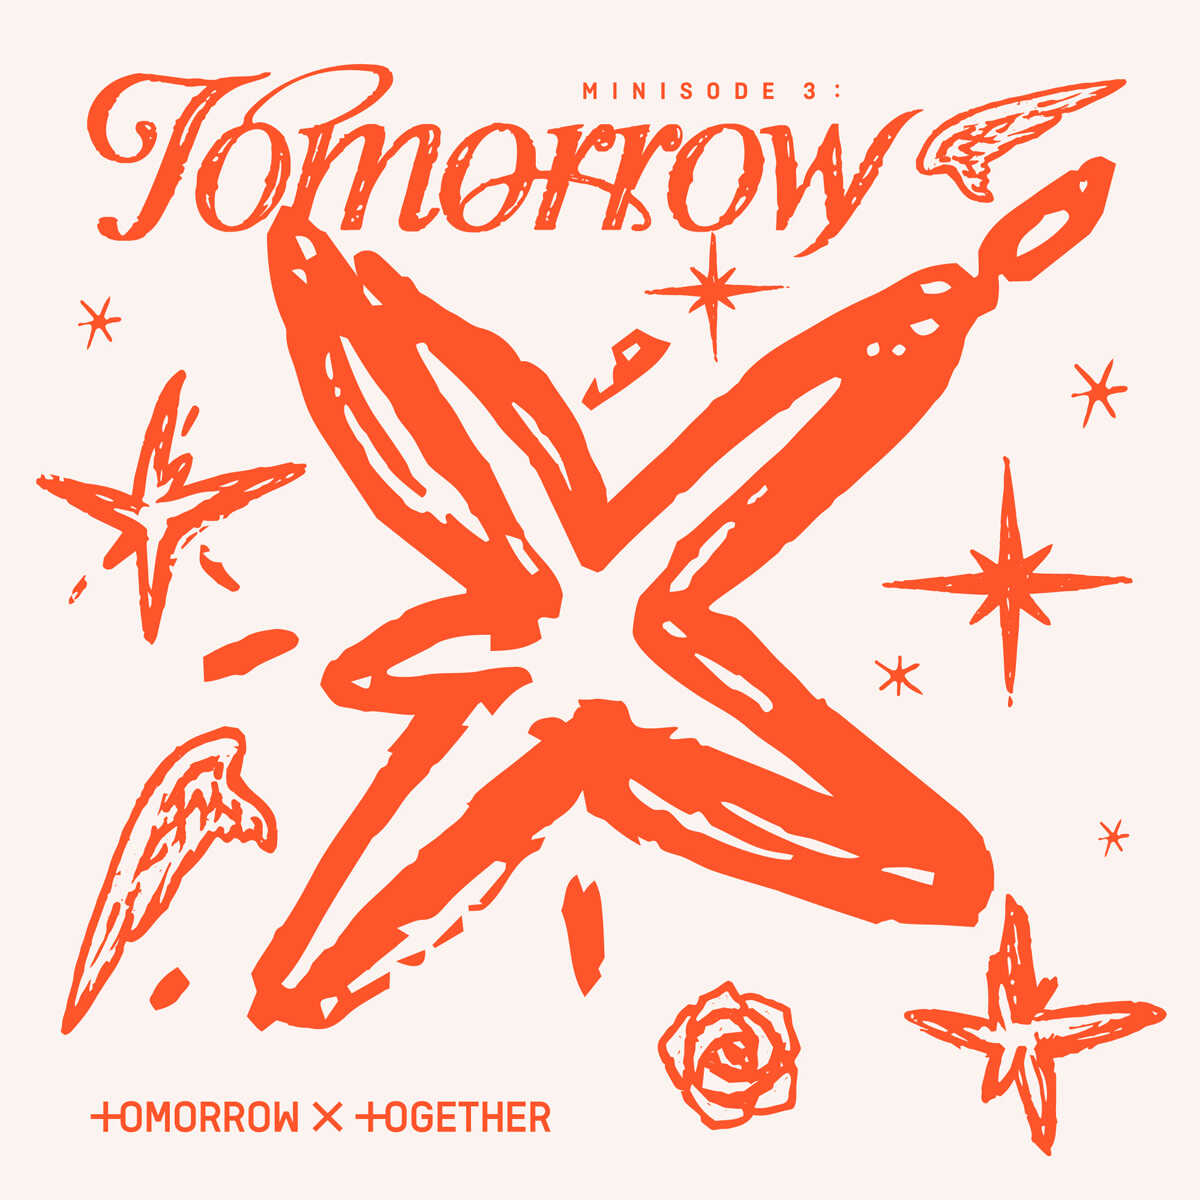 TOMORROW X TOGETHER 最新アルバム「minisode 3:TOMORROW」がオリコン週間合算チャートで1位を獲得